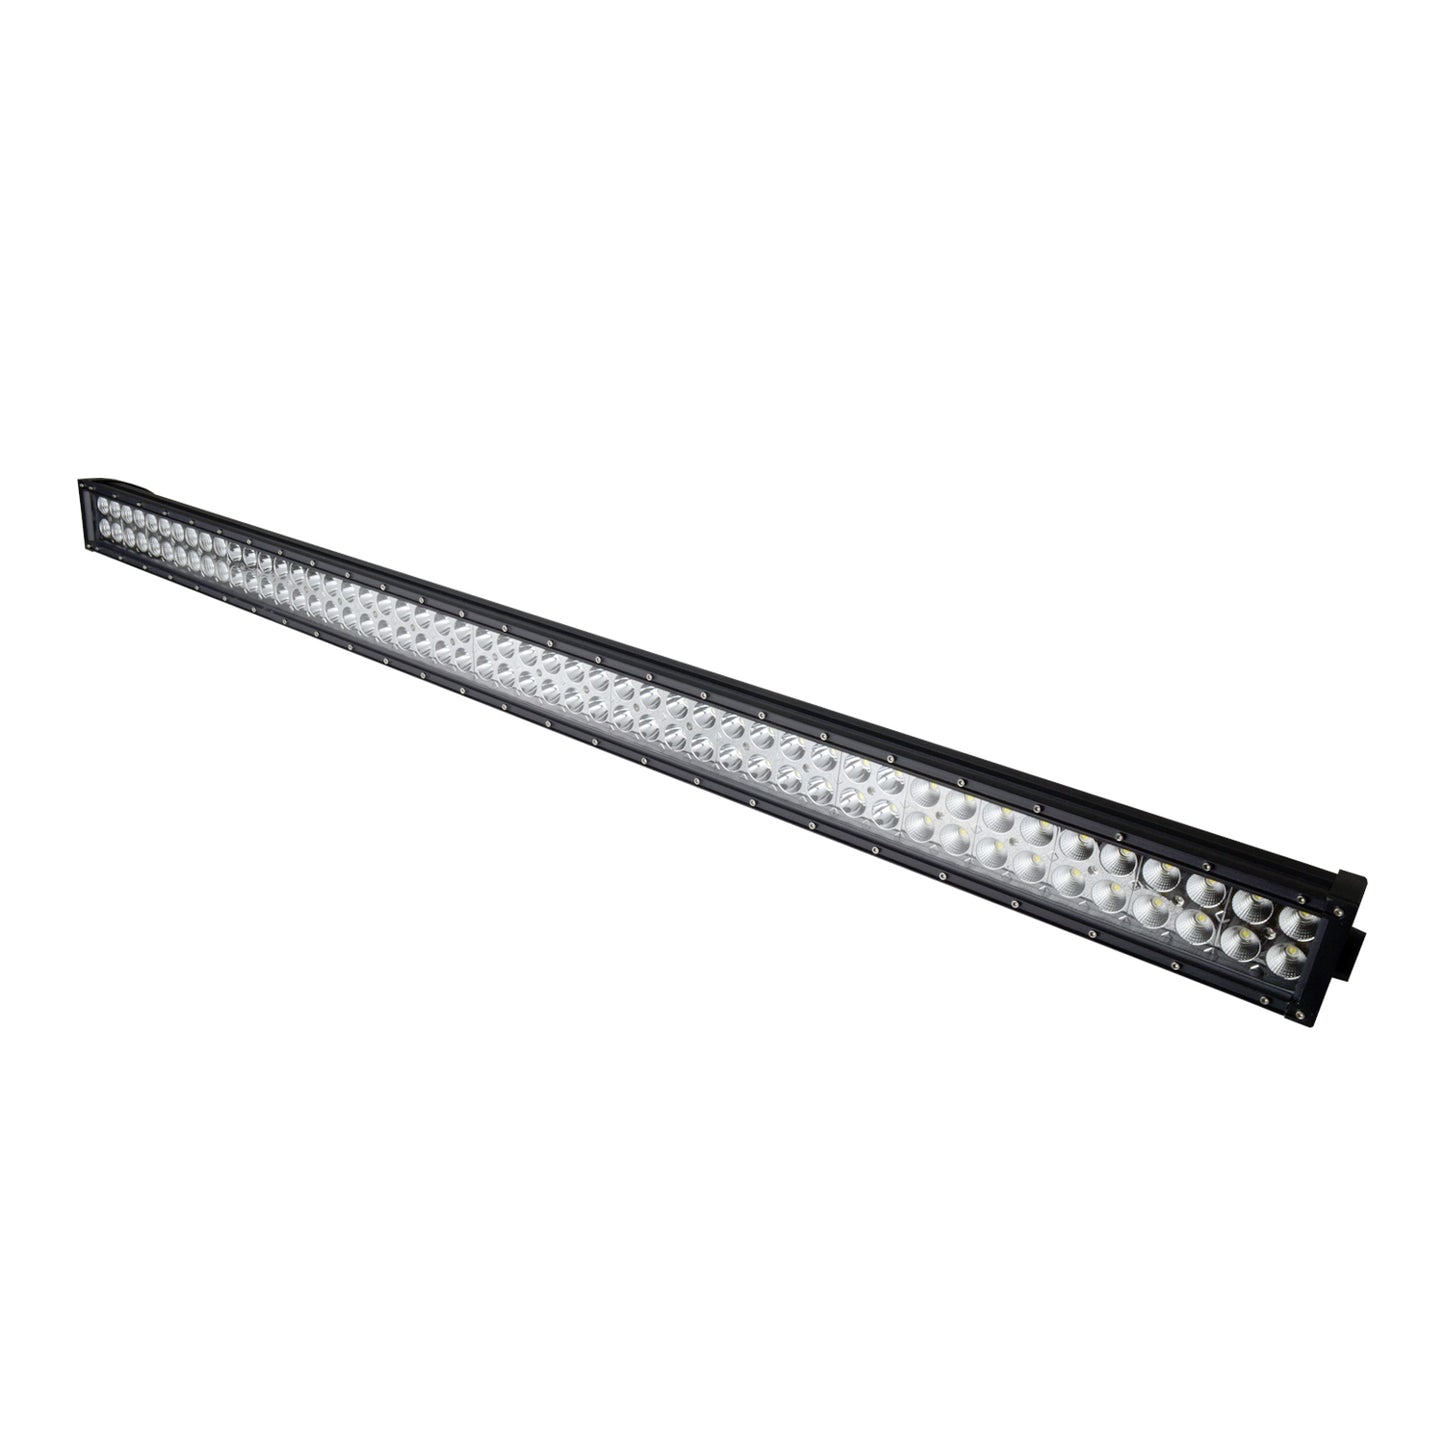 NL-LBR355-300W - 55" LED Light Bar